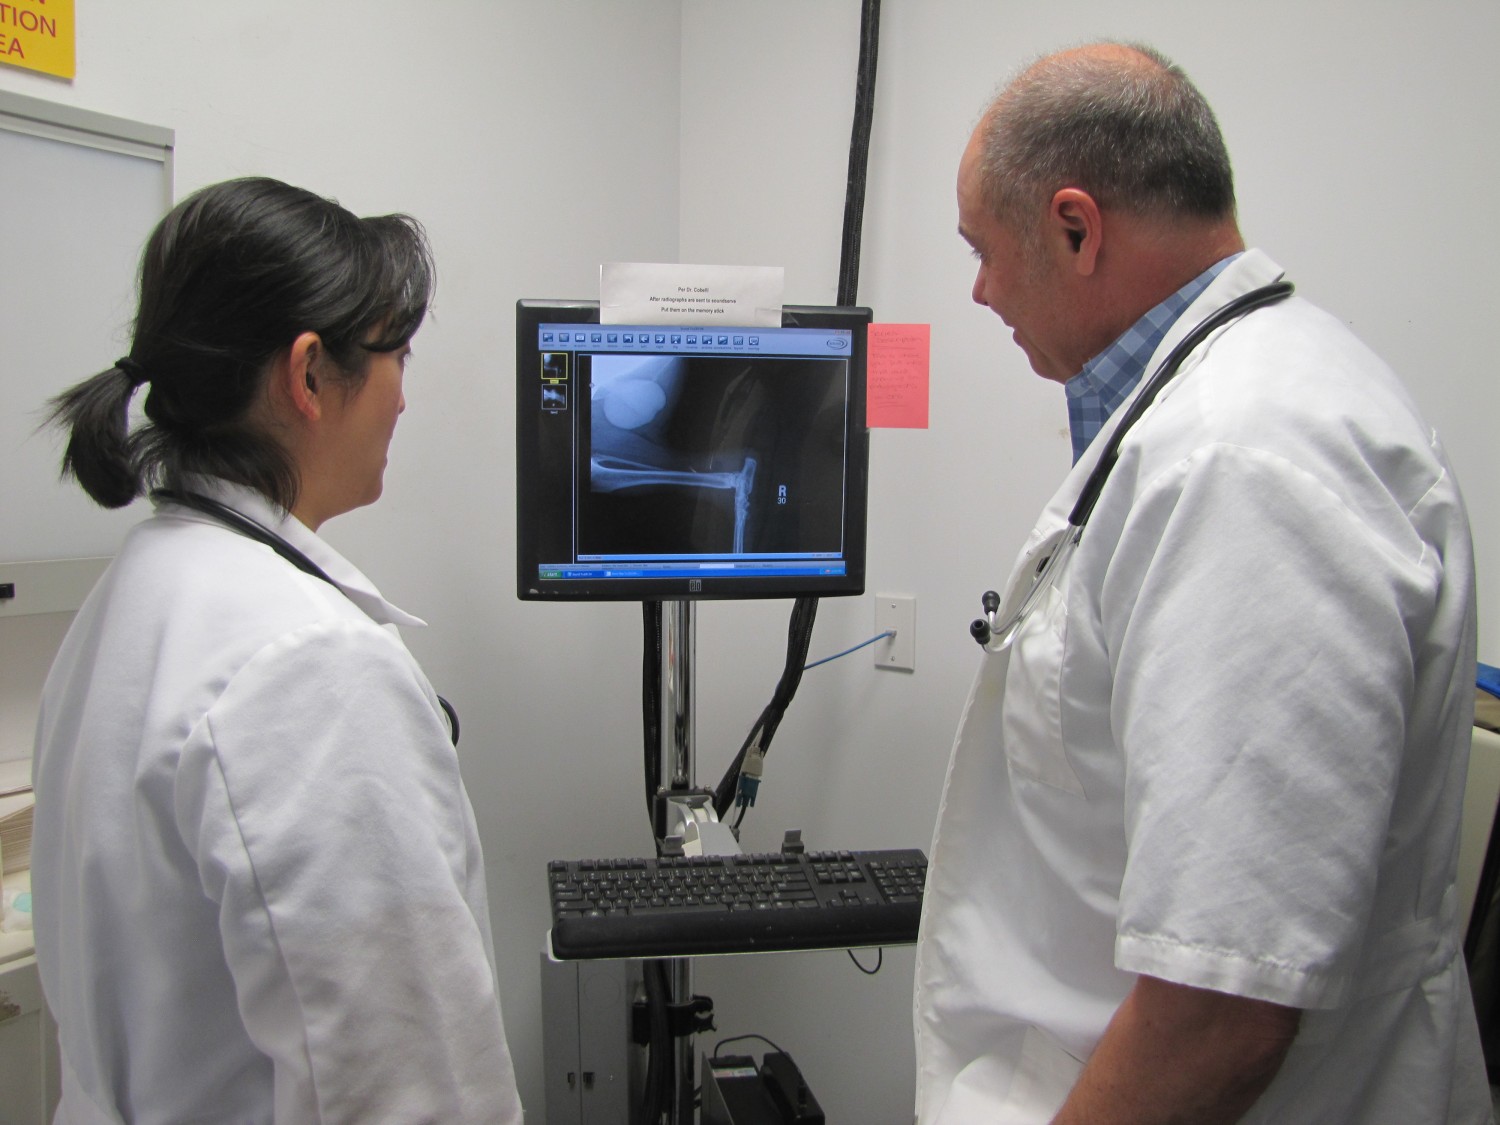 Dr. Chang and Dr. Jim examine a digital x-ray image